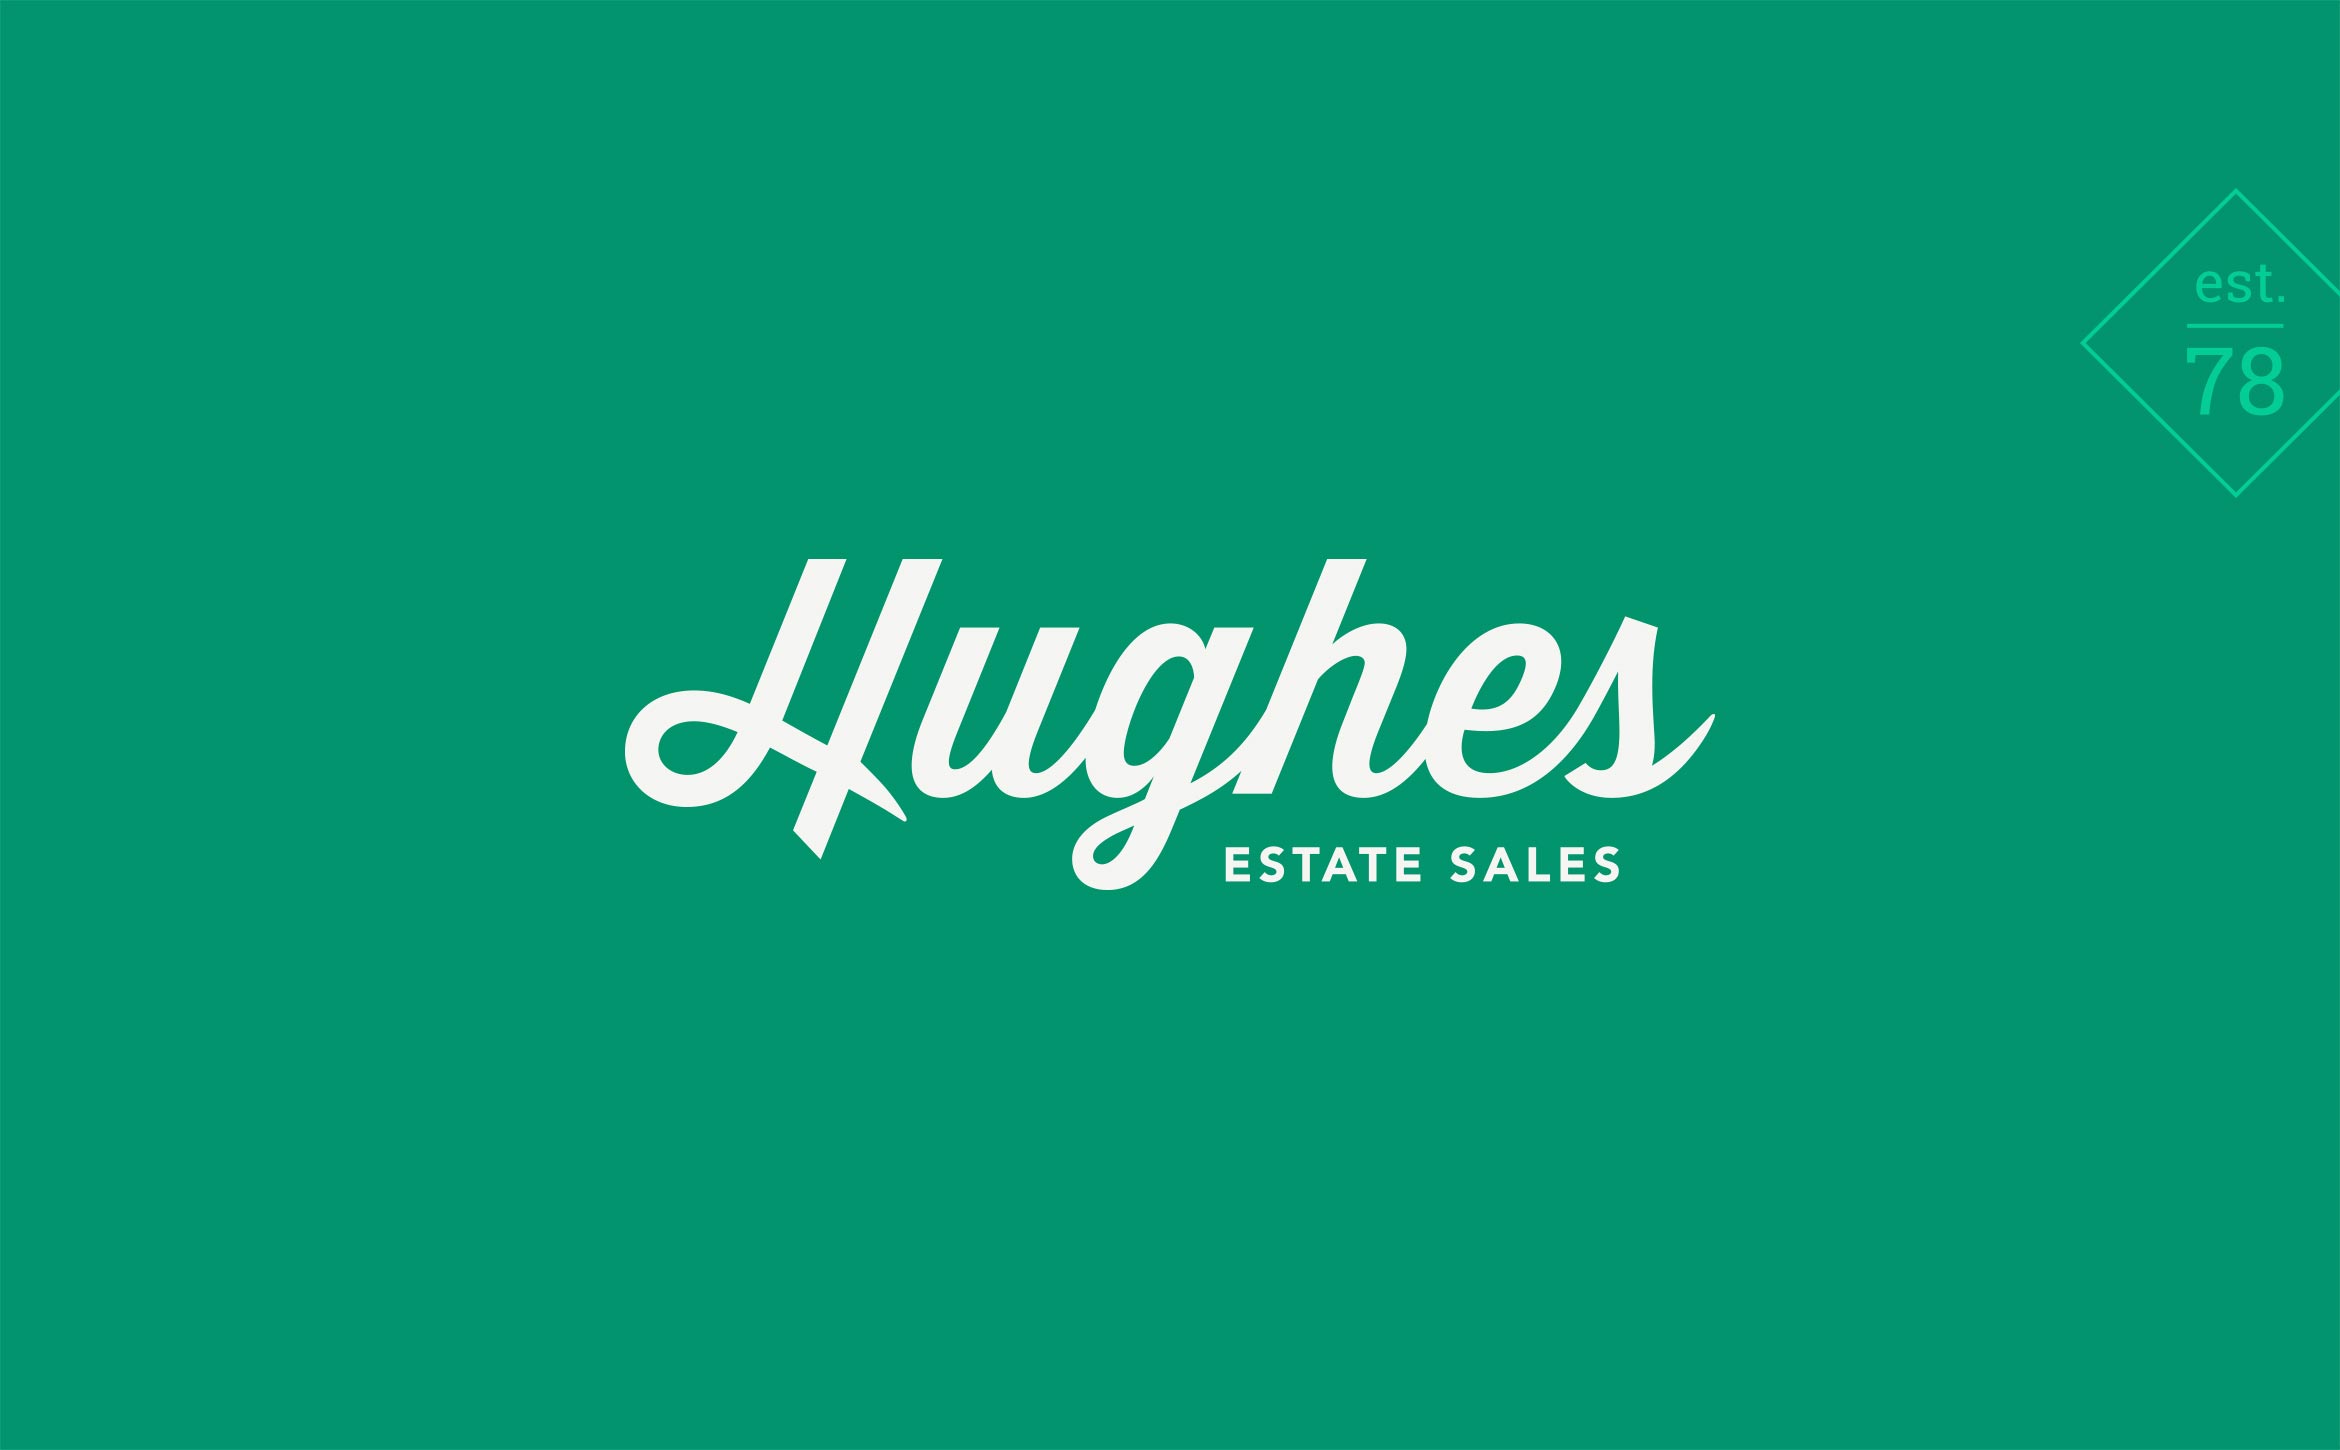 hughes estate sales logo white on green